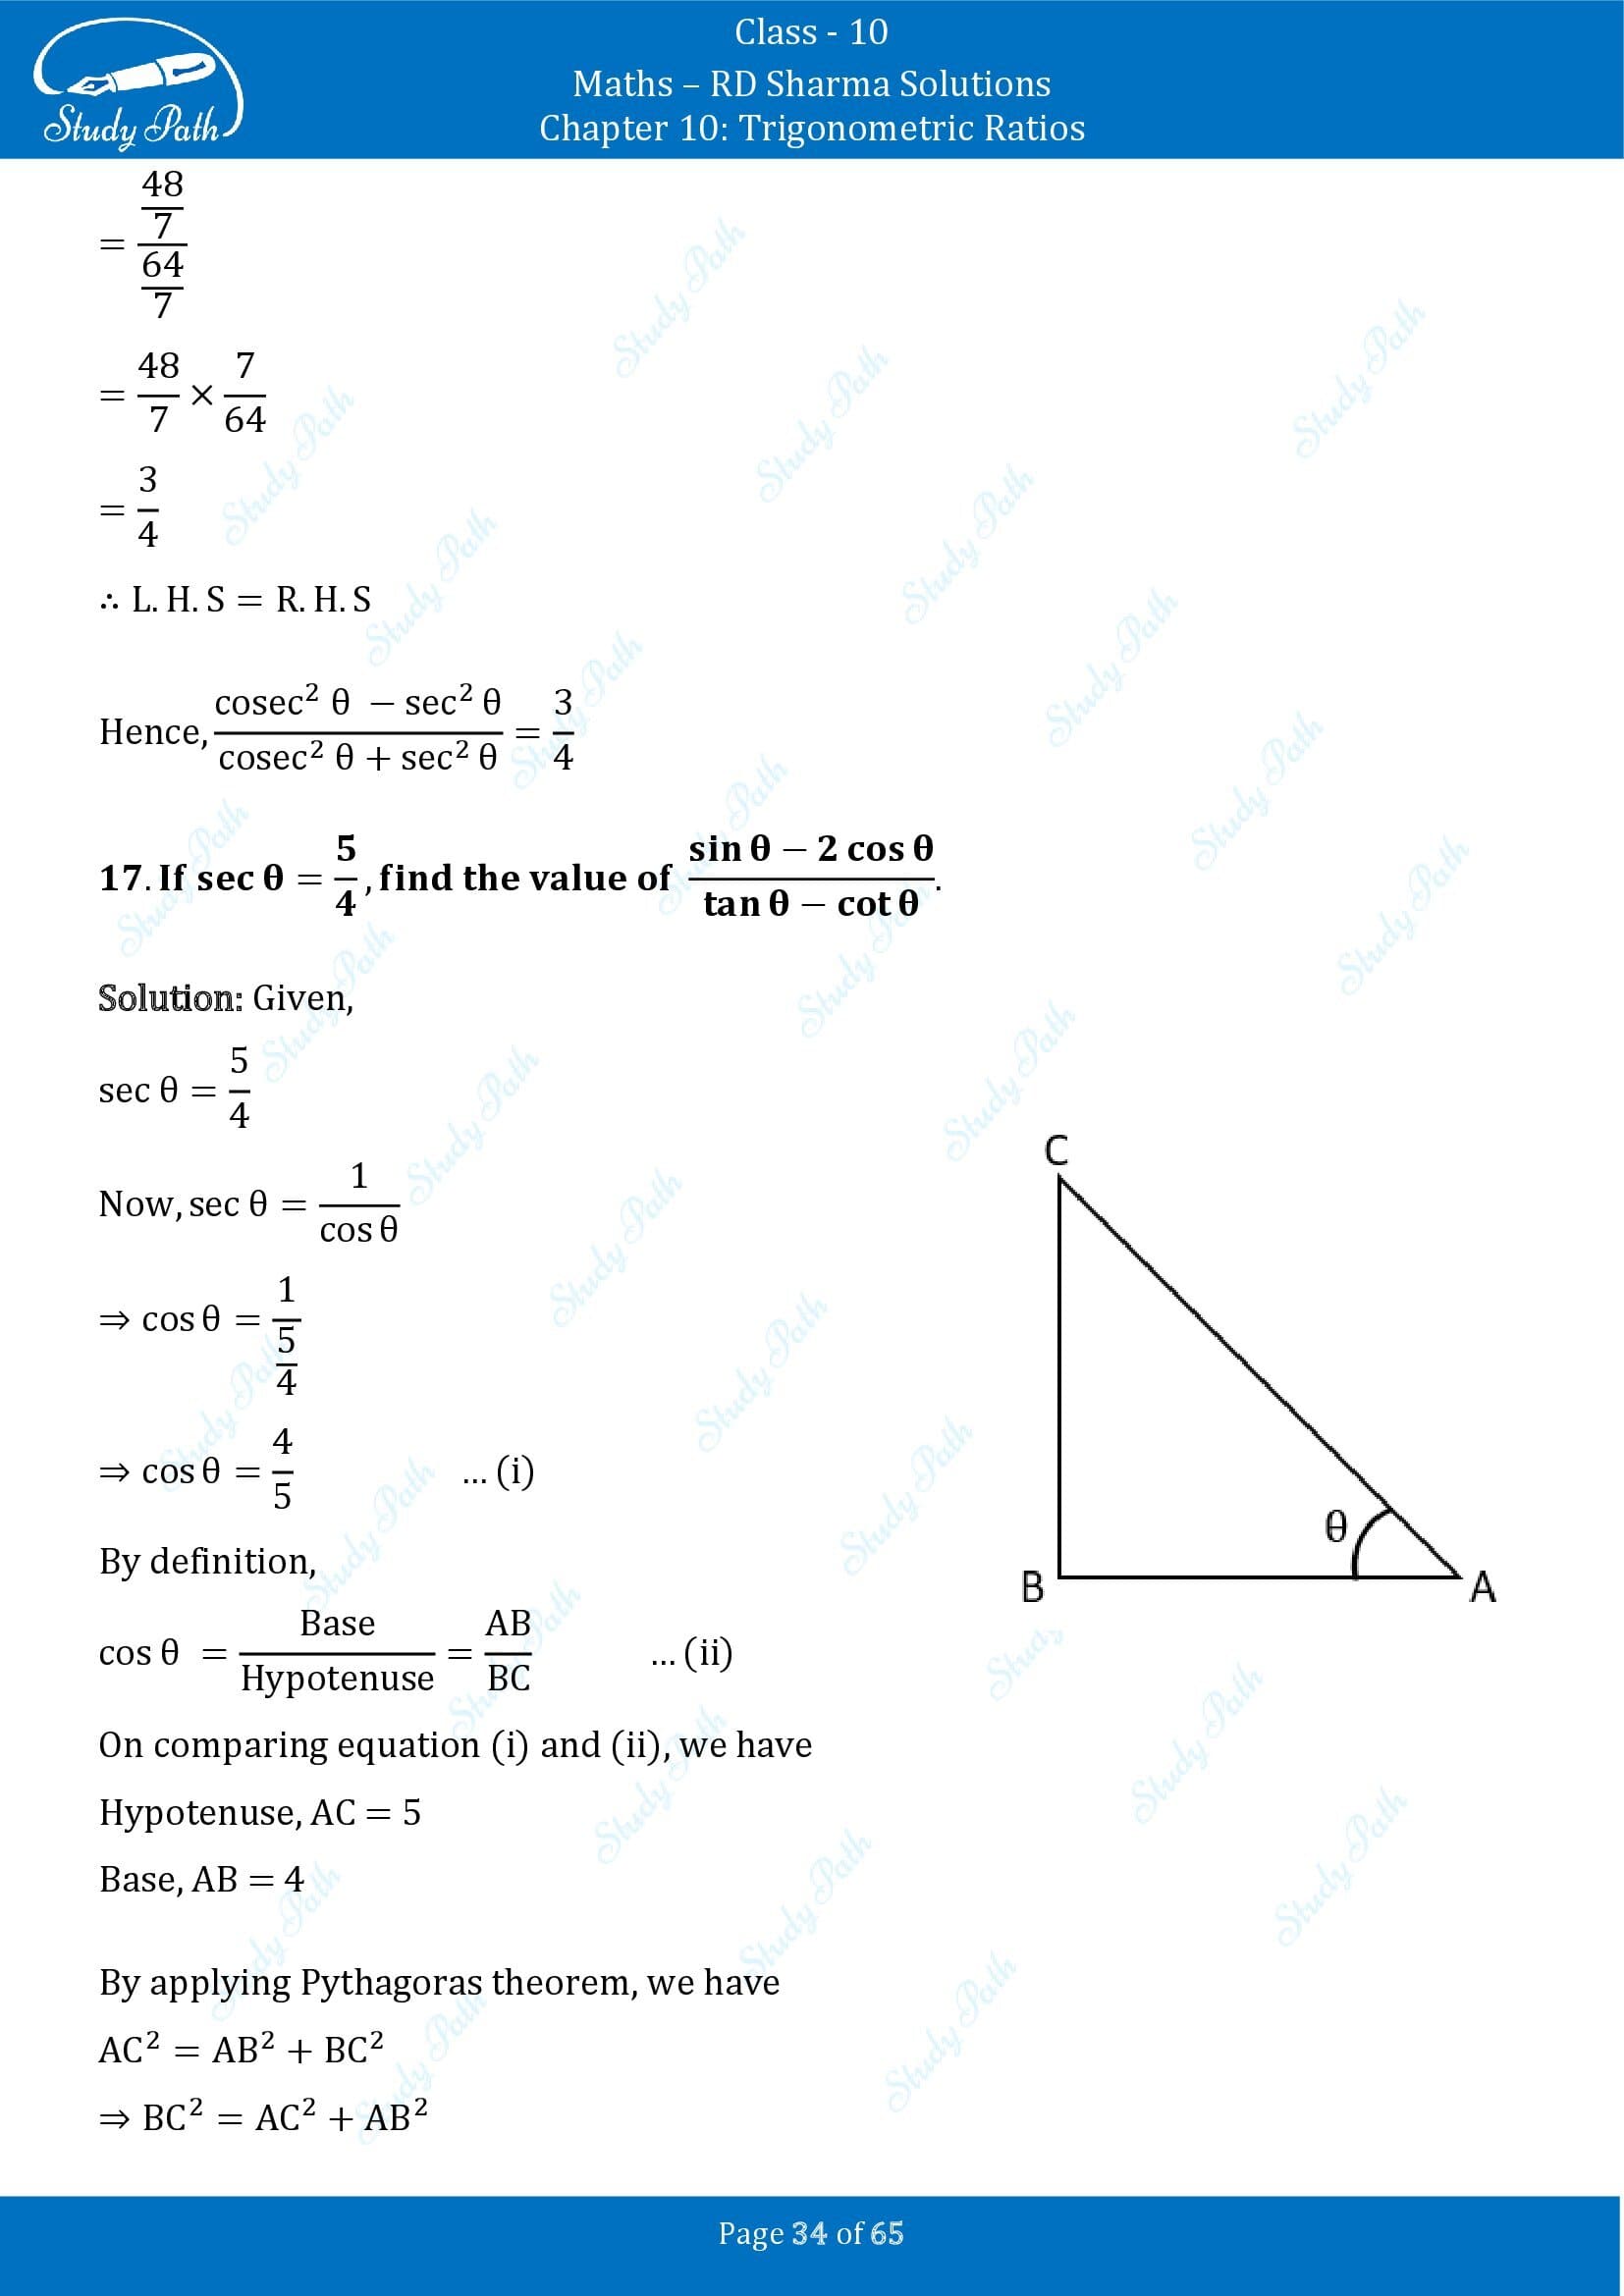 RD Sharma Solutions Class 10 Chapter 10 Trigonometric Ratios Exercise 10.1 00034